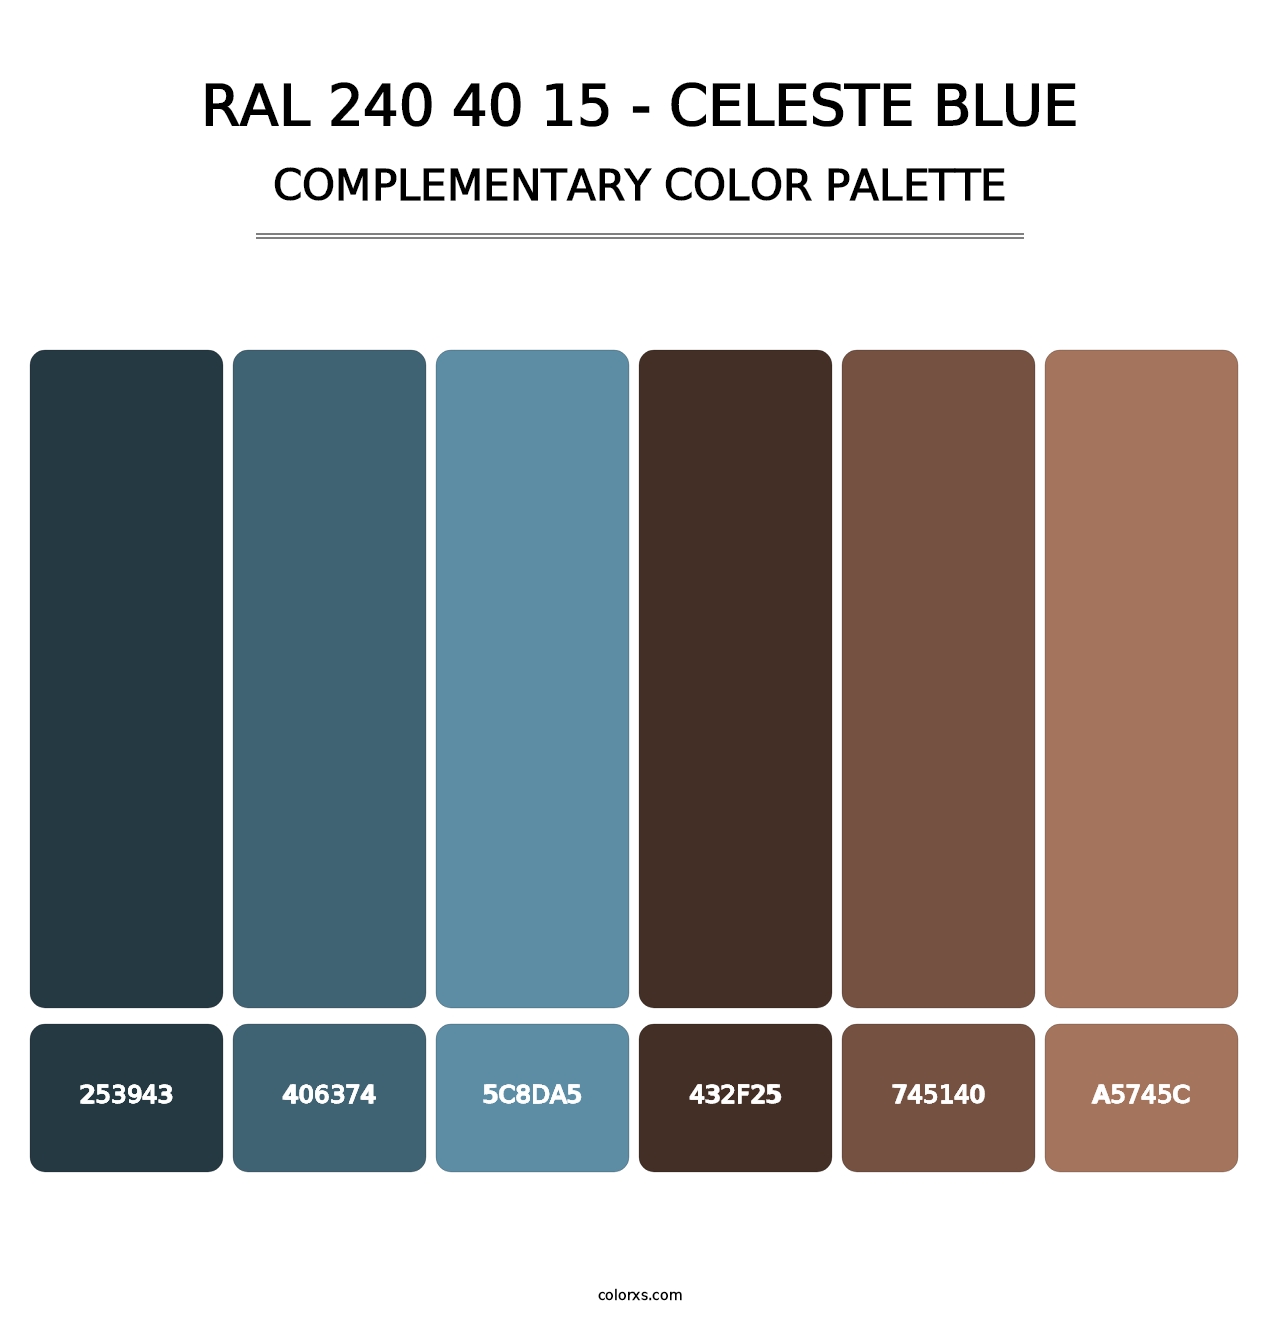 RAL 240 40 15 - Celeste Blue - Complementary Color Palette